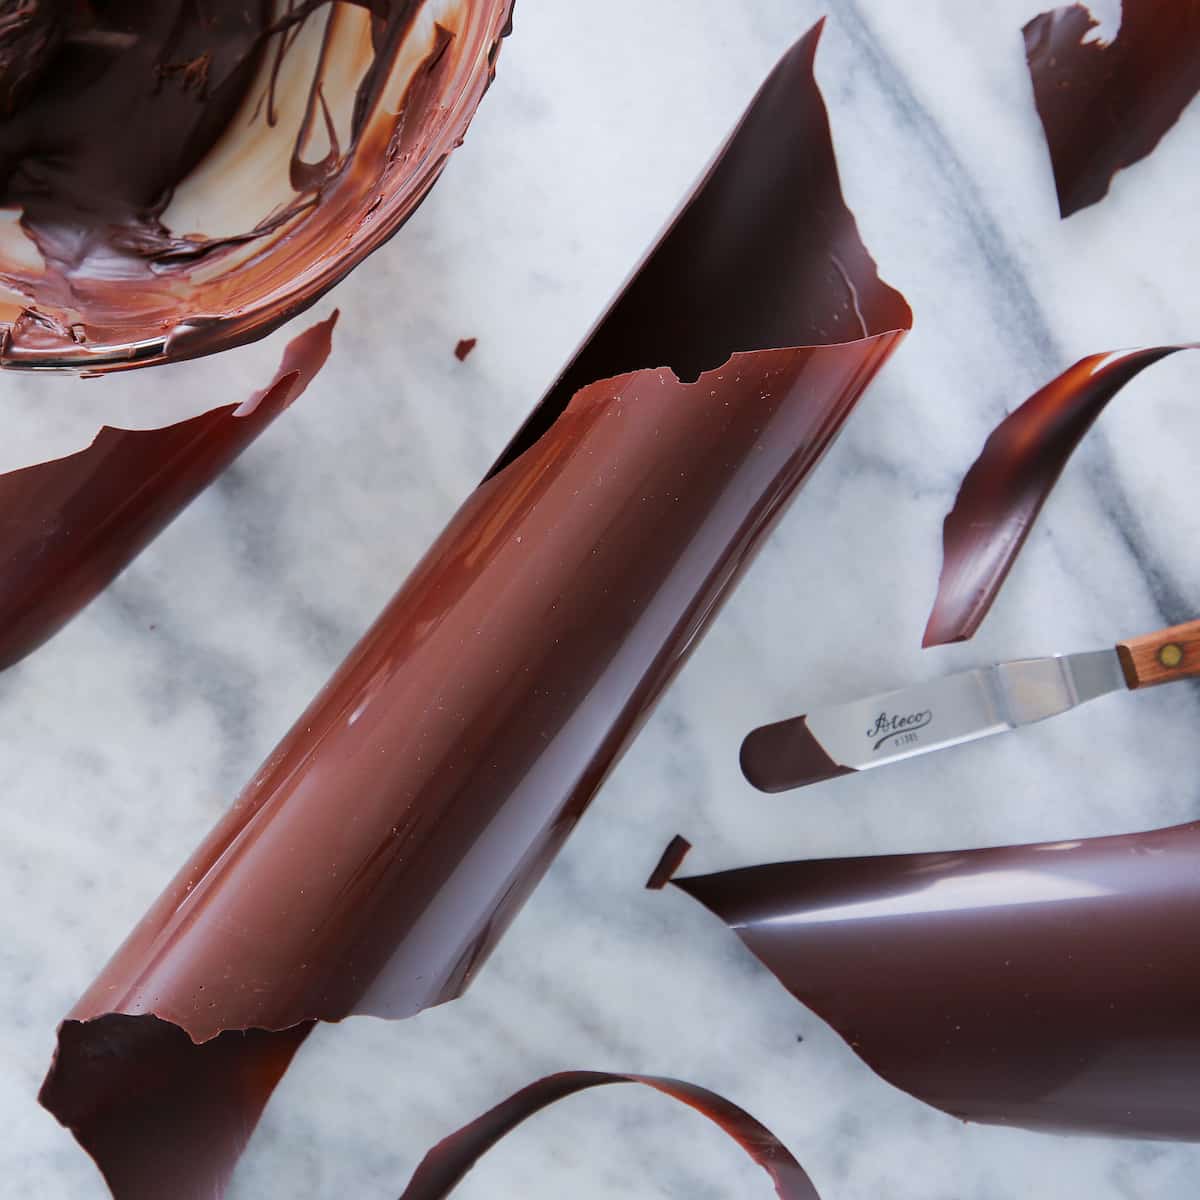 https://cheflindseyfarr.com/wp-content/uploads/2022/02/how-to-temper-dark-chocolate-featured.jpg